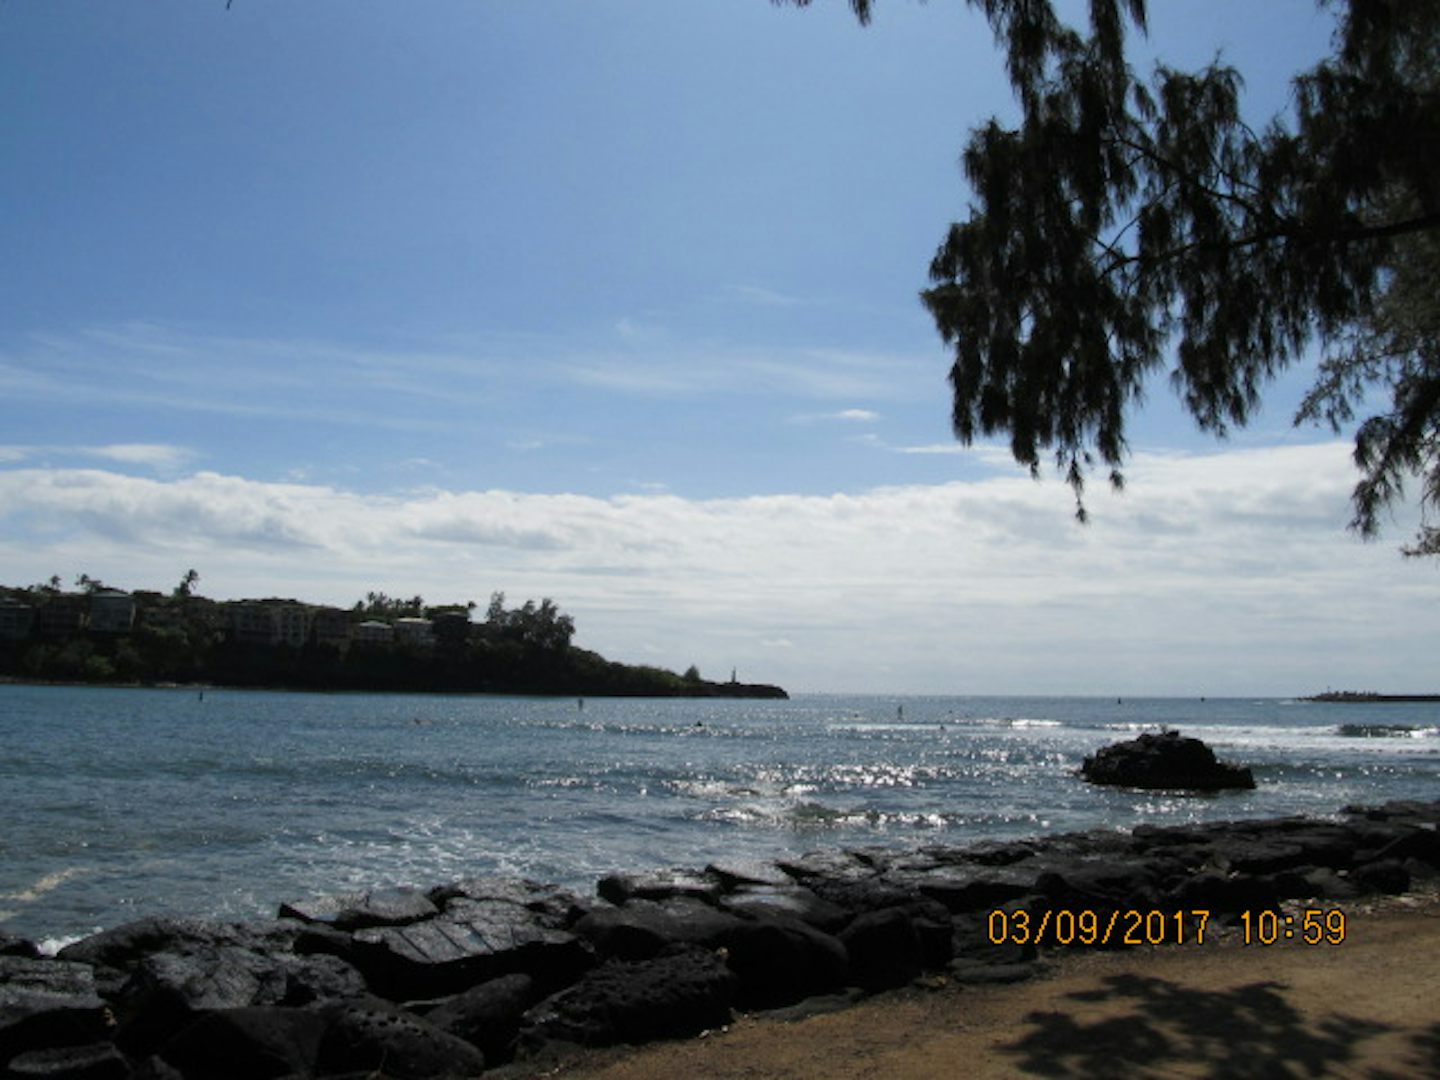 Walk to this free beach in Kauai!